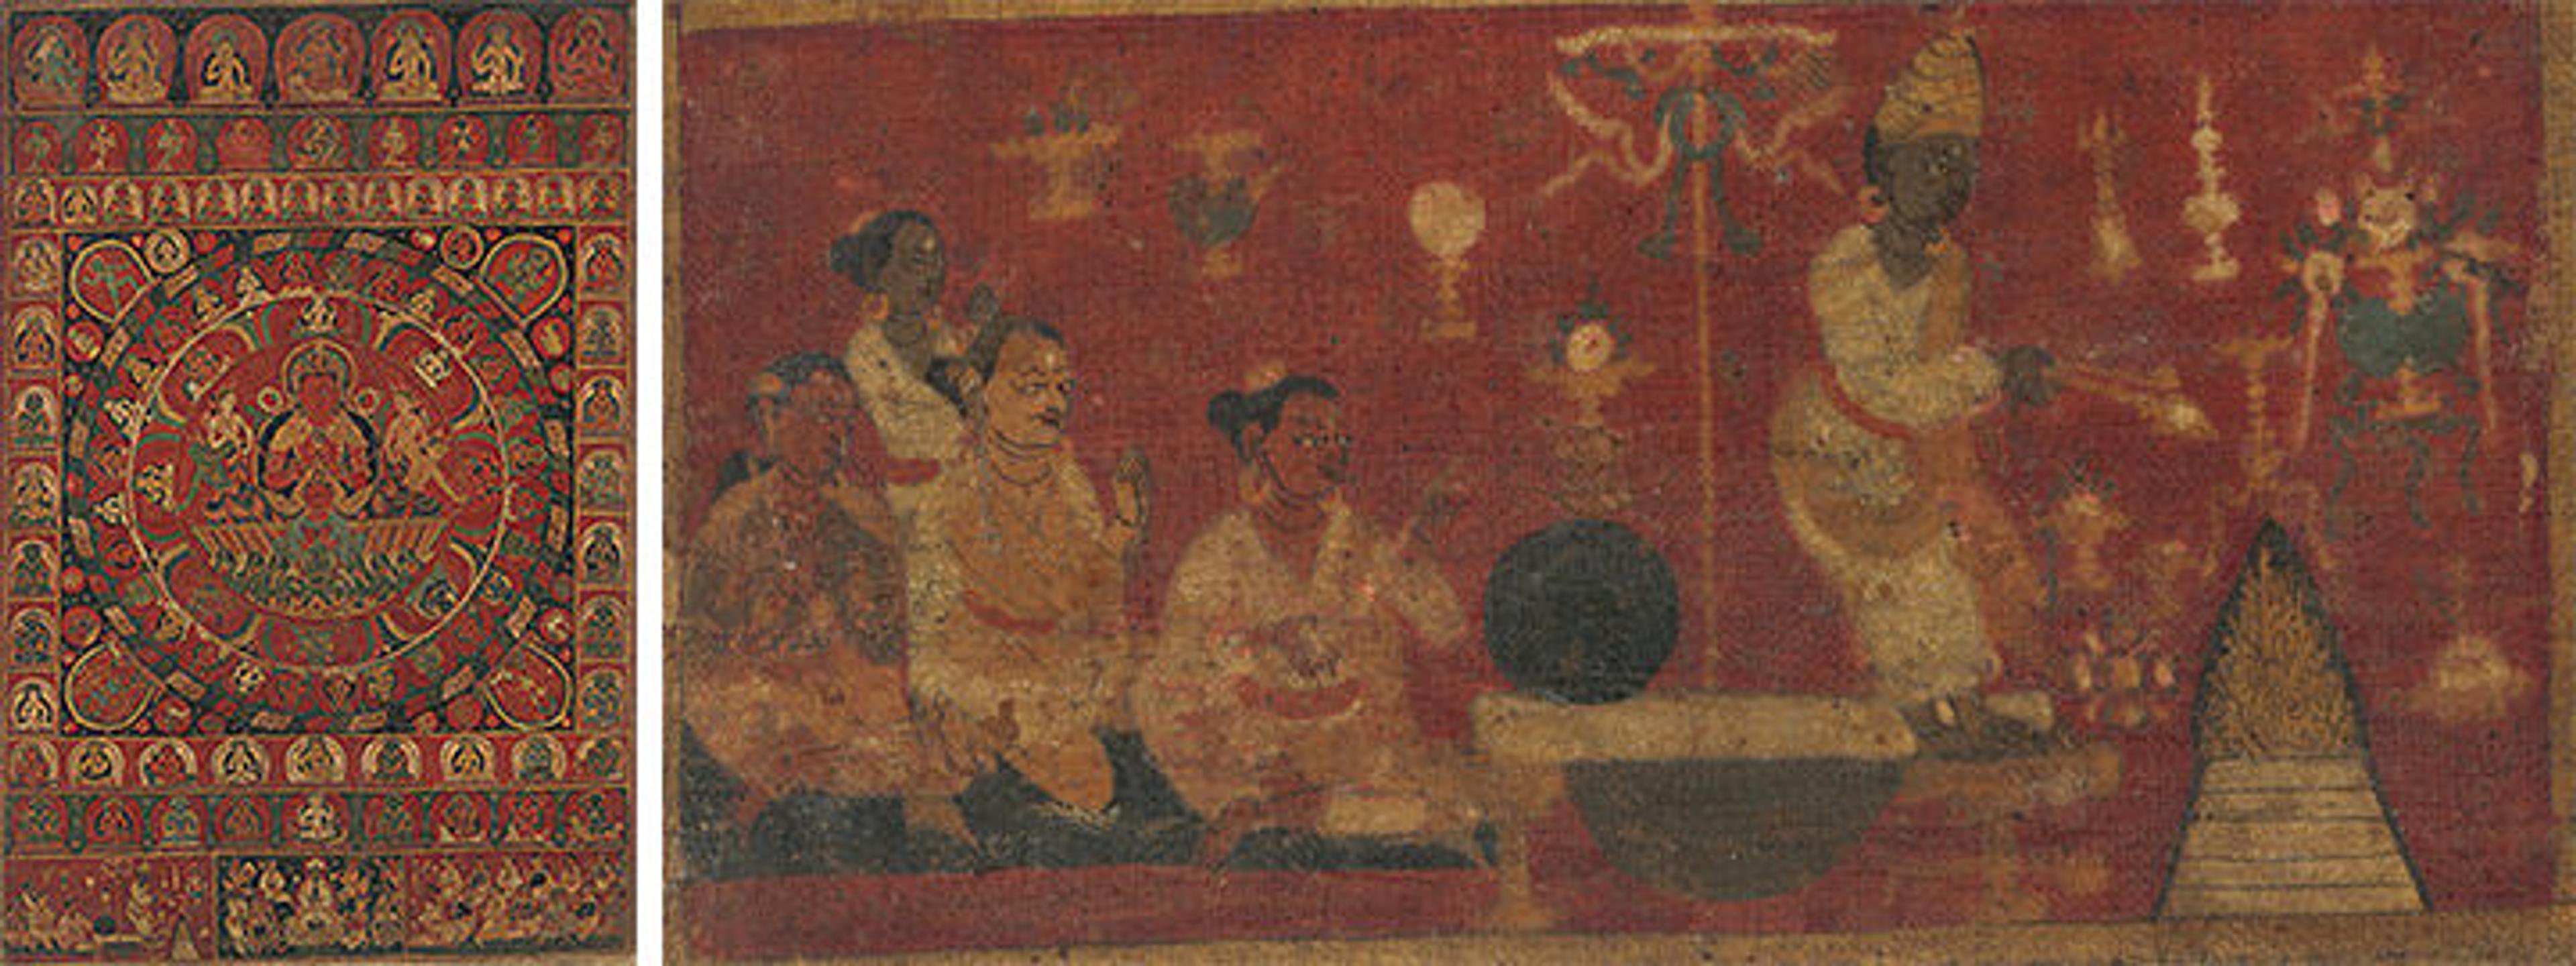 Mandala of Sun God Surya with detail of priest performing puja